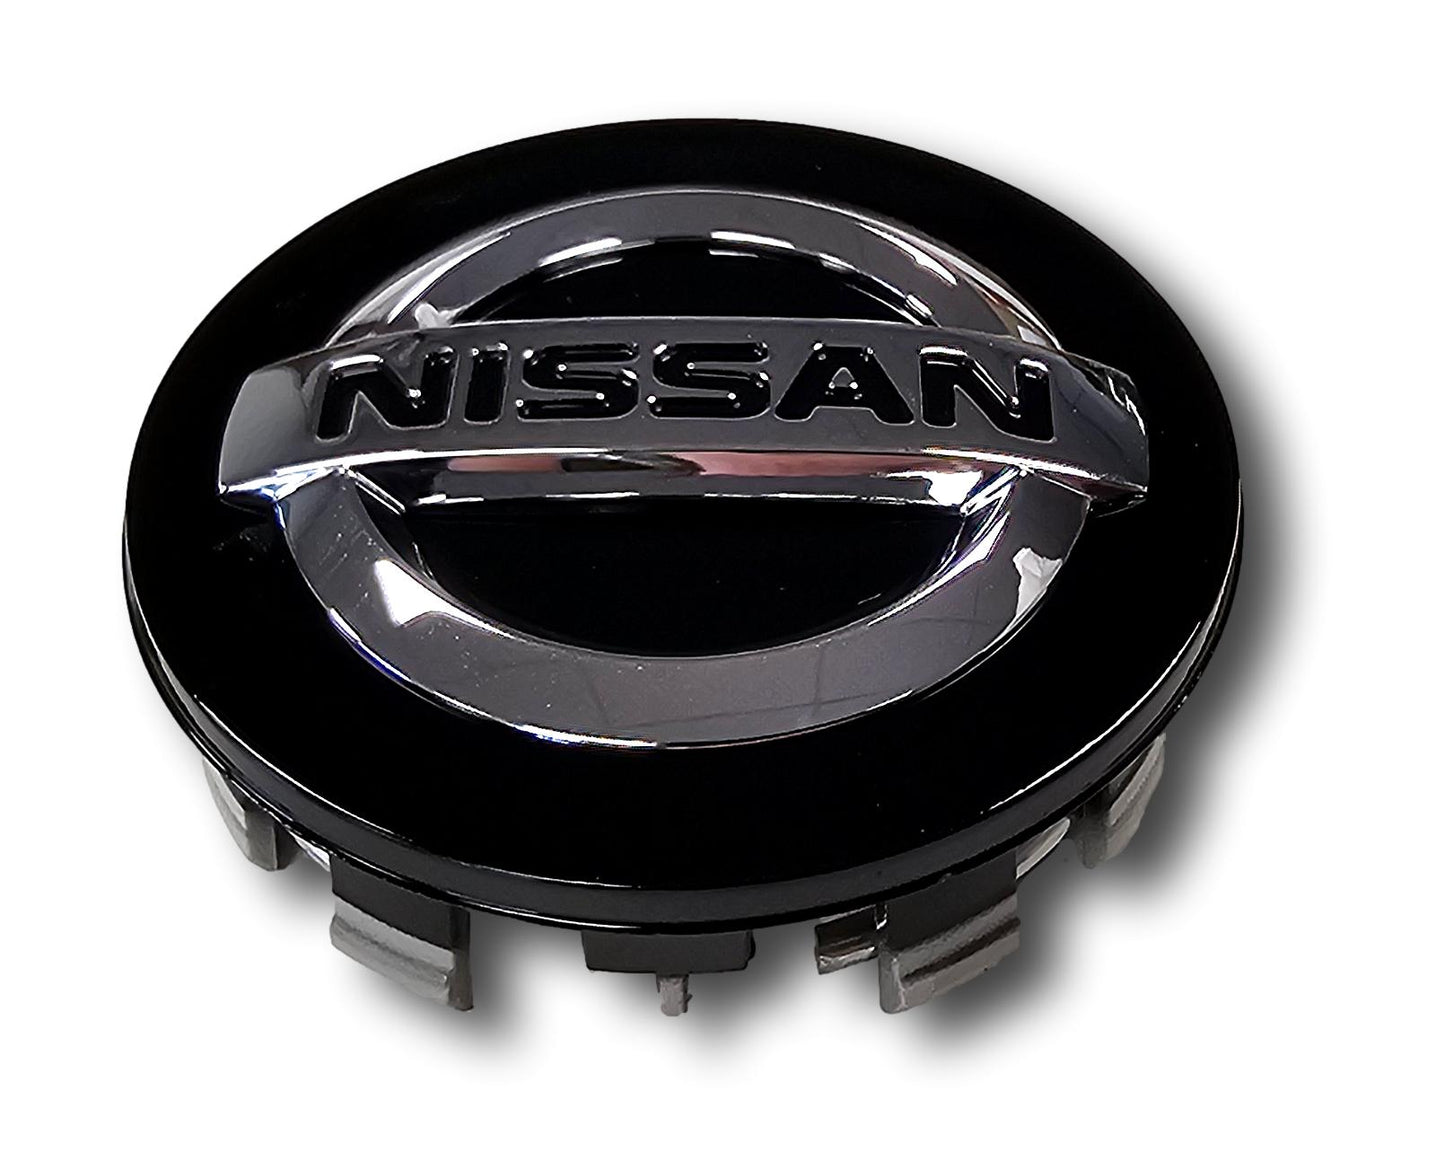 Tapa central de rueda original Nissan Qashqai, color negro, individual 40342 BR02A